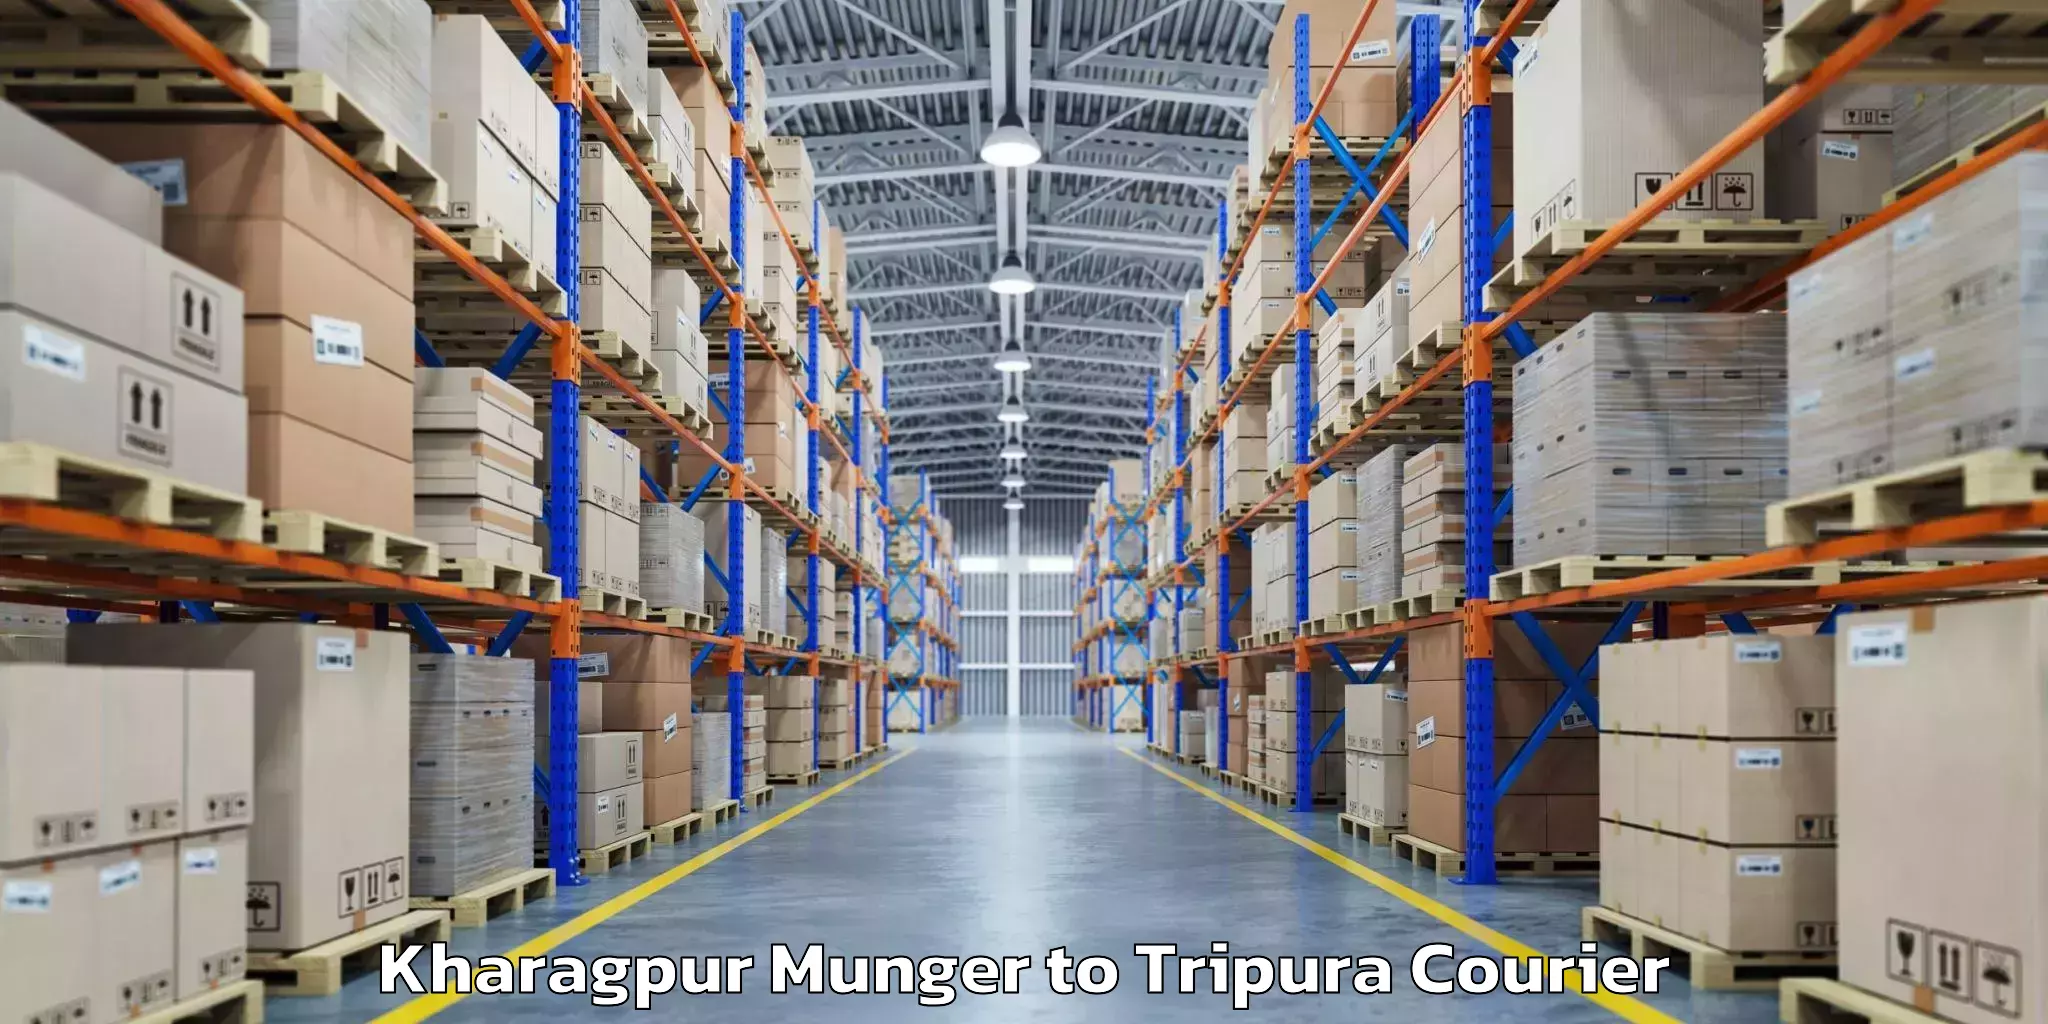 Luggage transport consultancy Kharagpur Munger to Dharmanagar